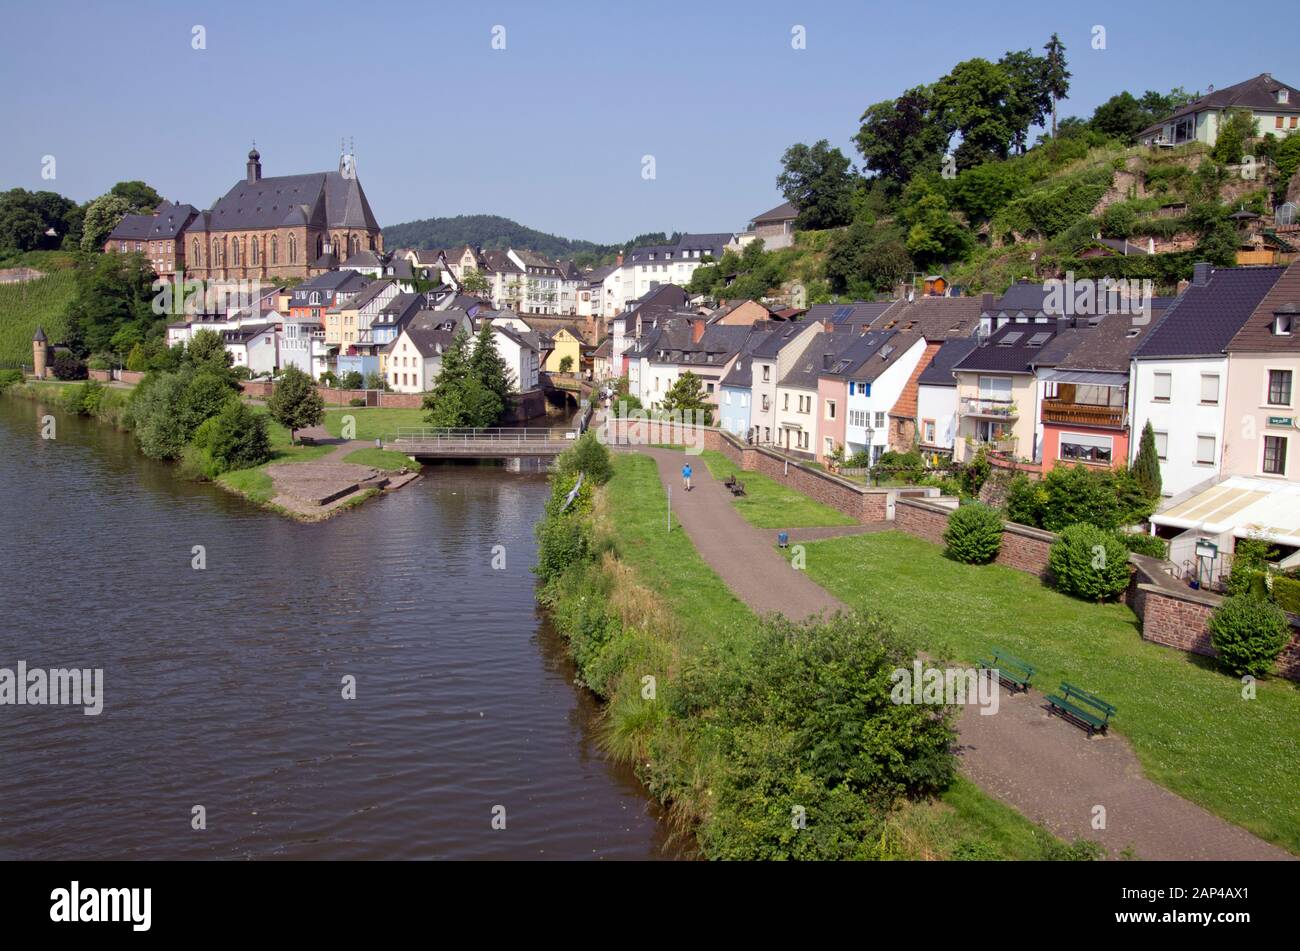 Confluence of the rivers Saar and Leuk, Saarburg, Germany Stock Photo